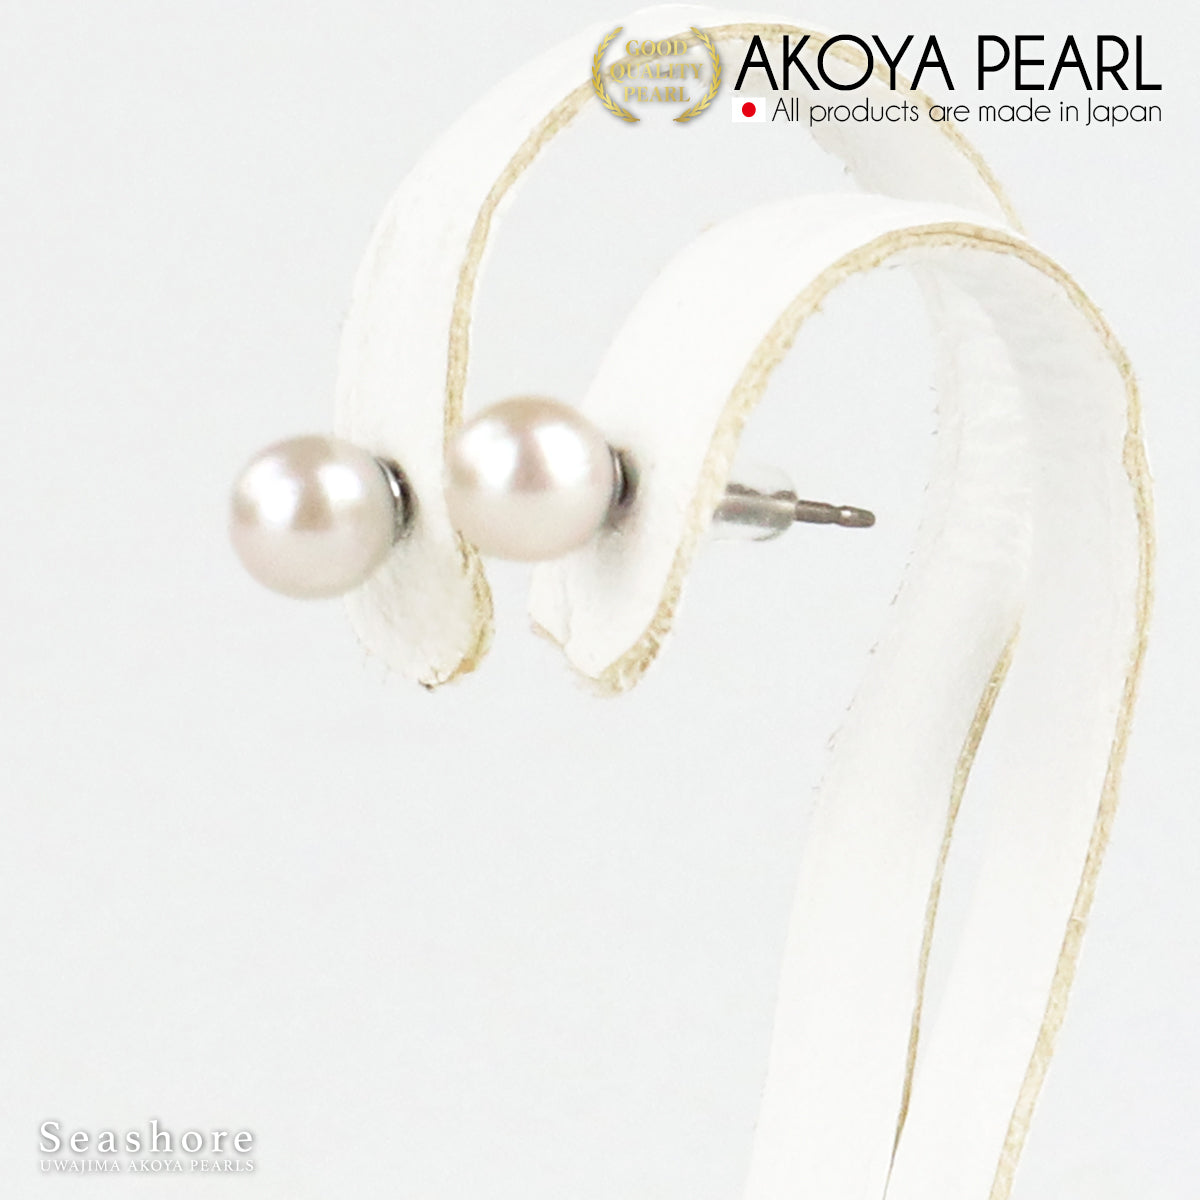 Baby Pearl Stud Earrings/Resin Clip Metal Allergy Compatible [5.0-6.0mm] Titanium/Resin Akoya Pearl Popular Everyday Use